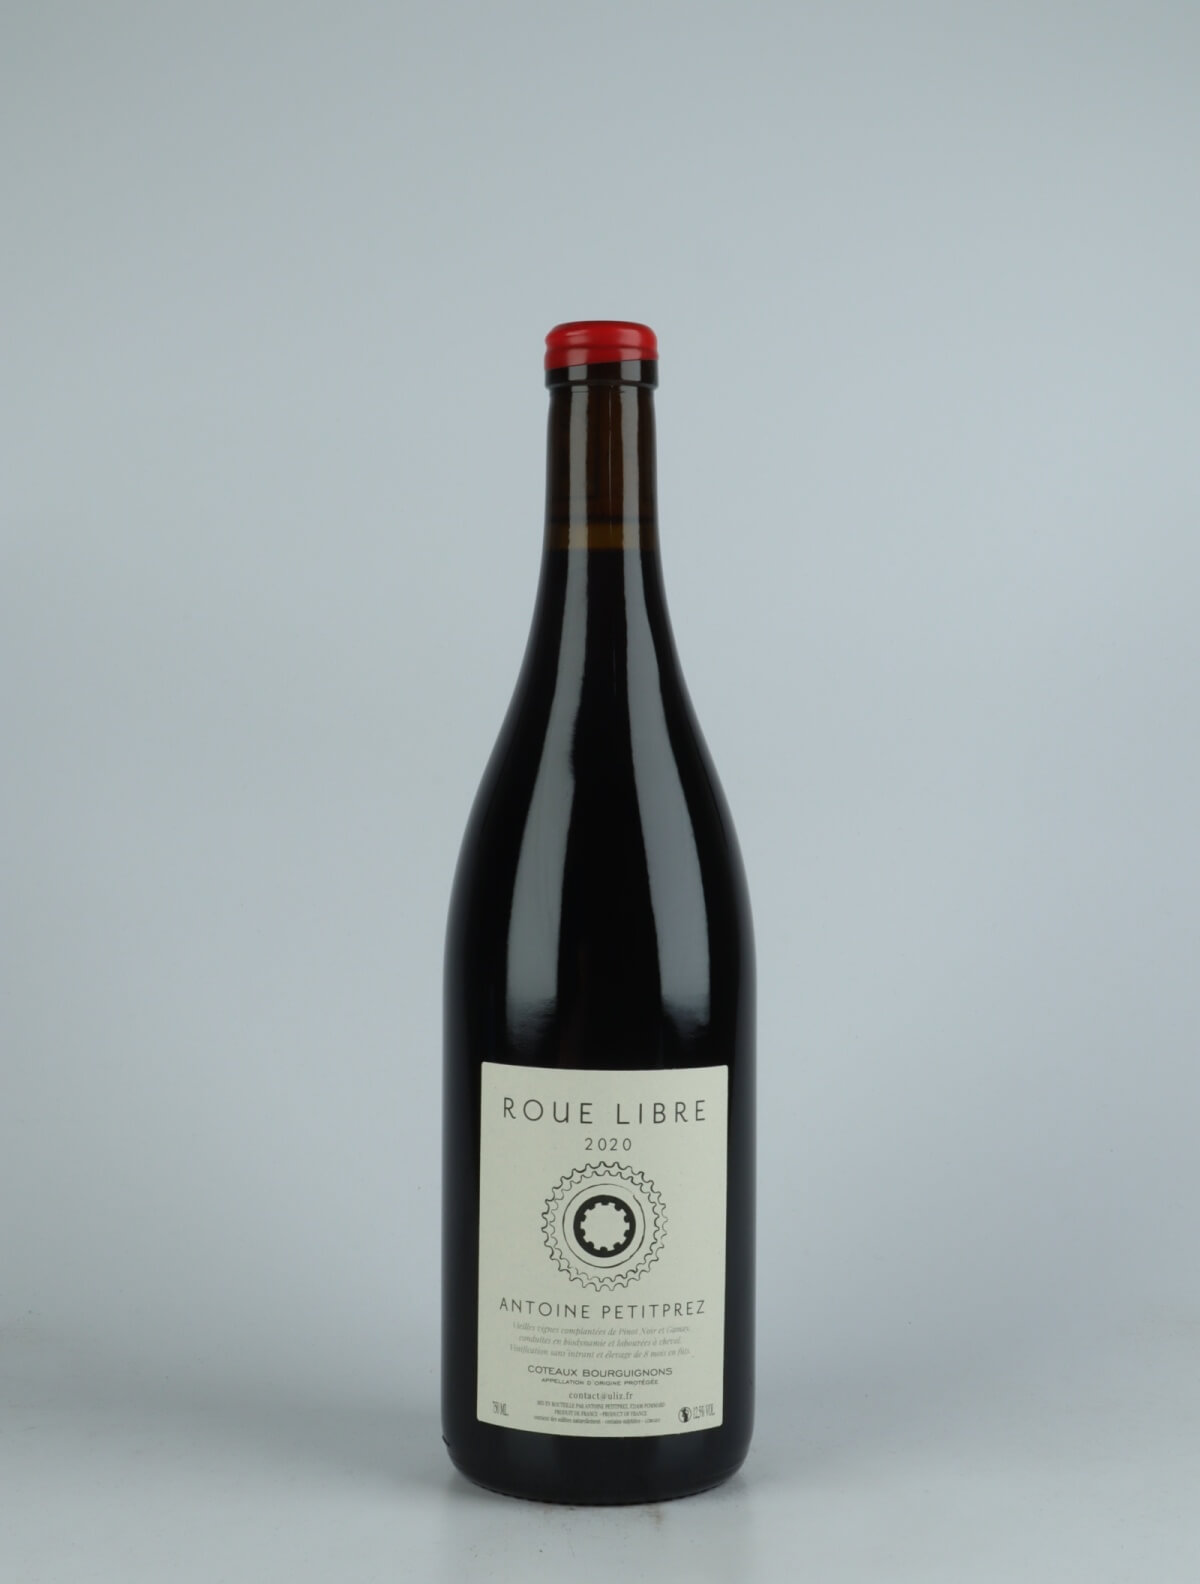 A bottle 2020 Coteaux Bourguignons - Roue Libre Red wine from Antoine Petitprez, Burgundy in France